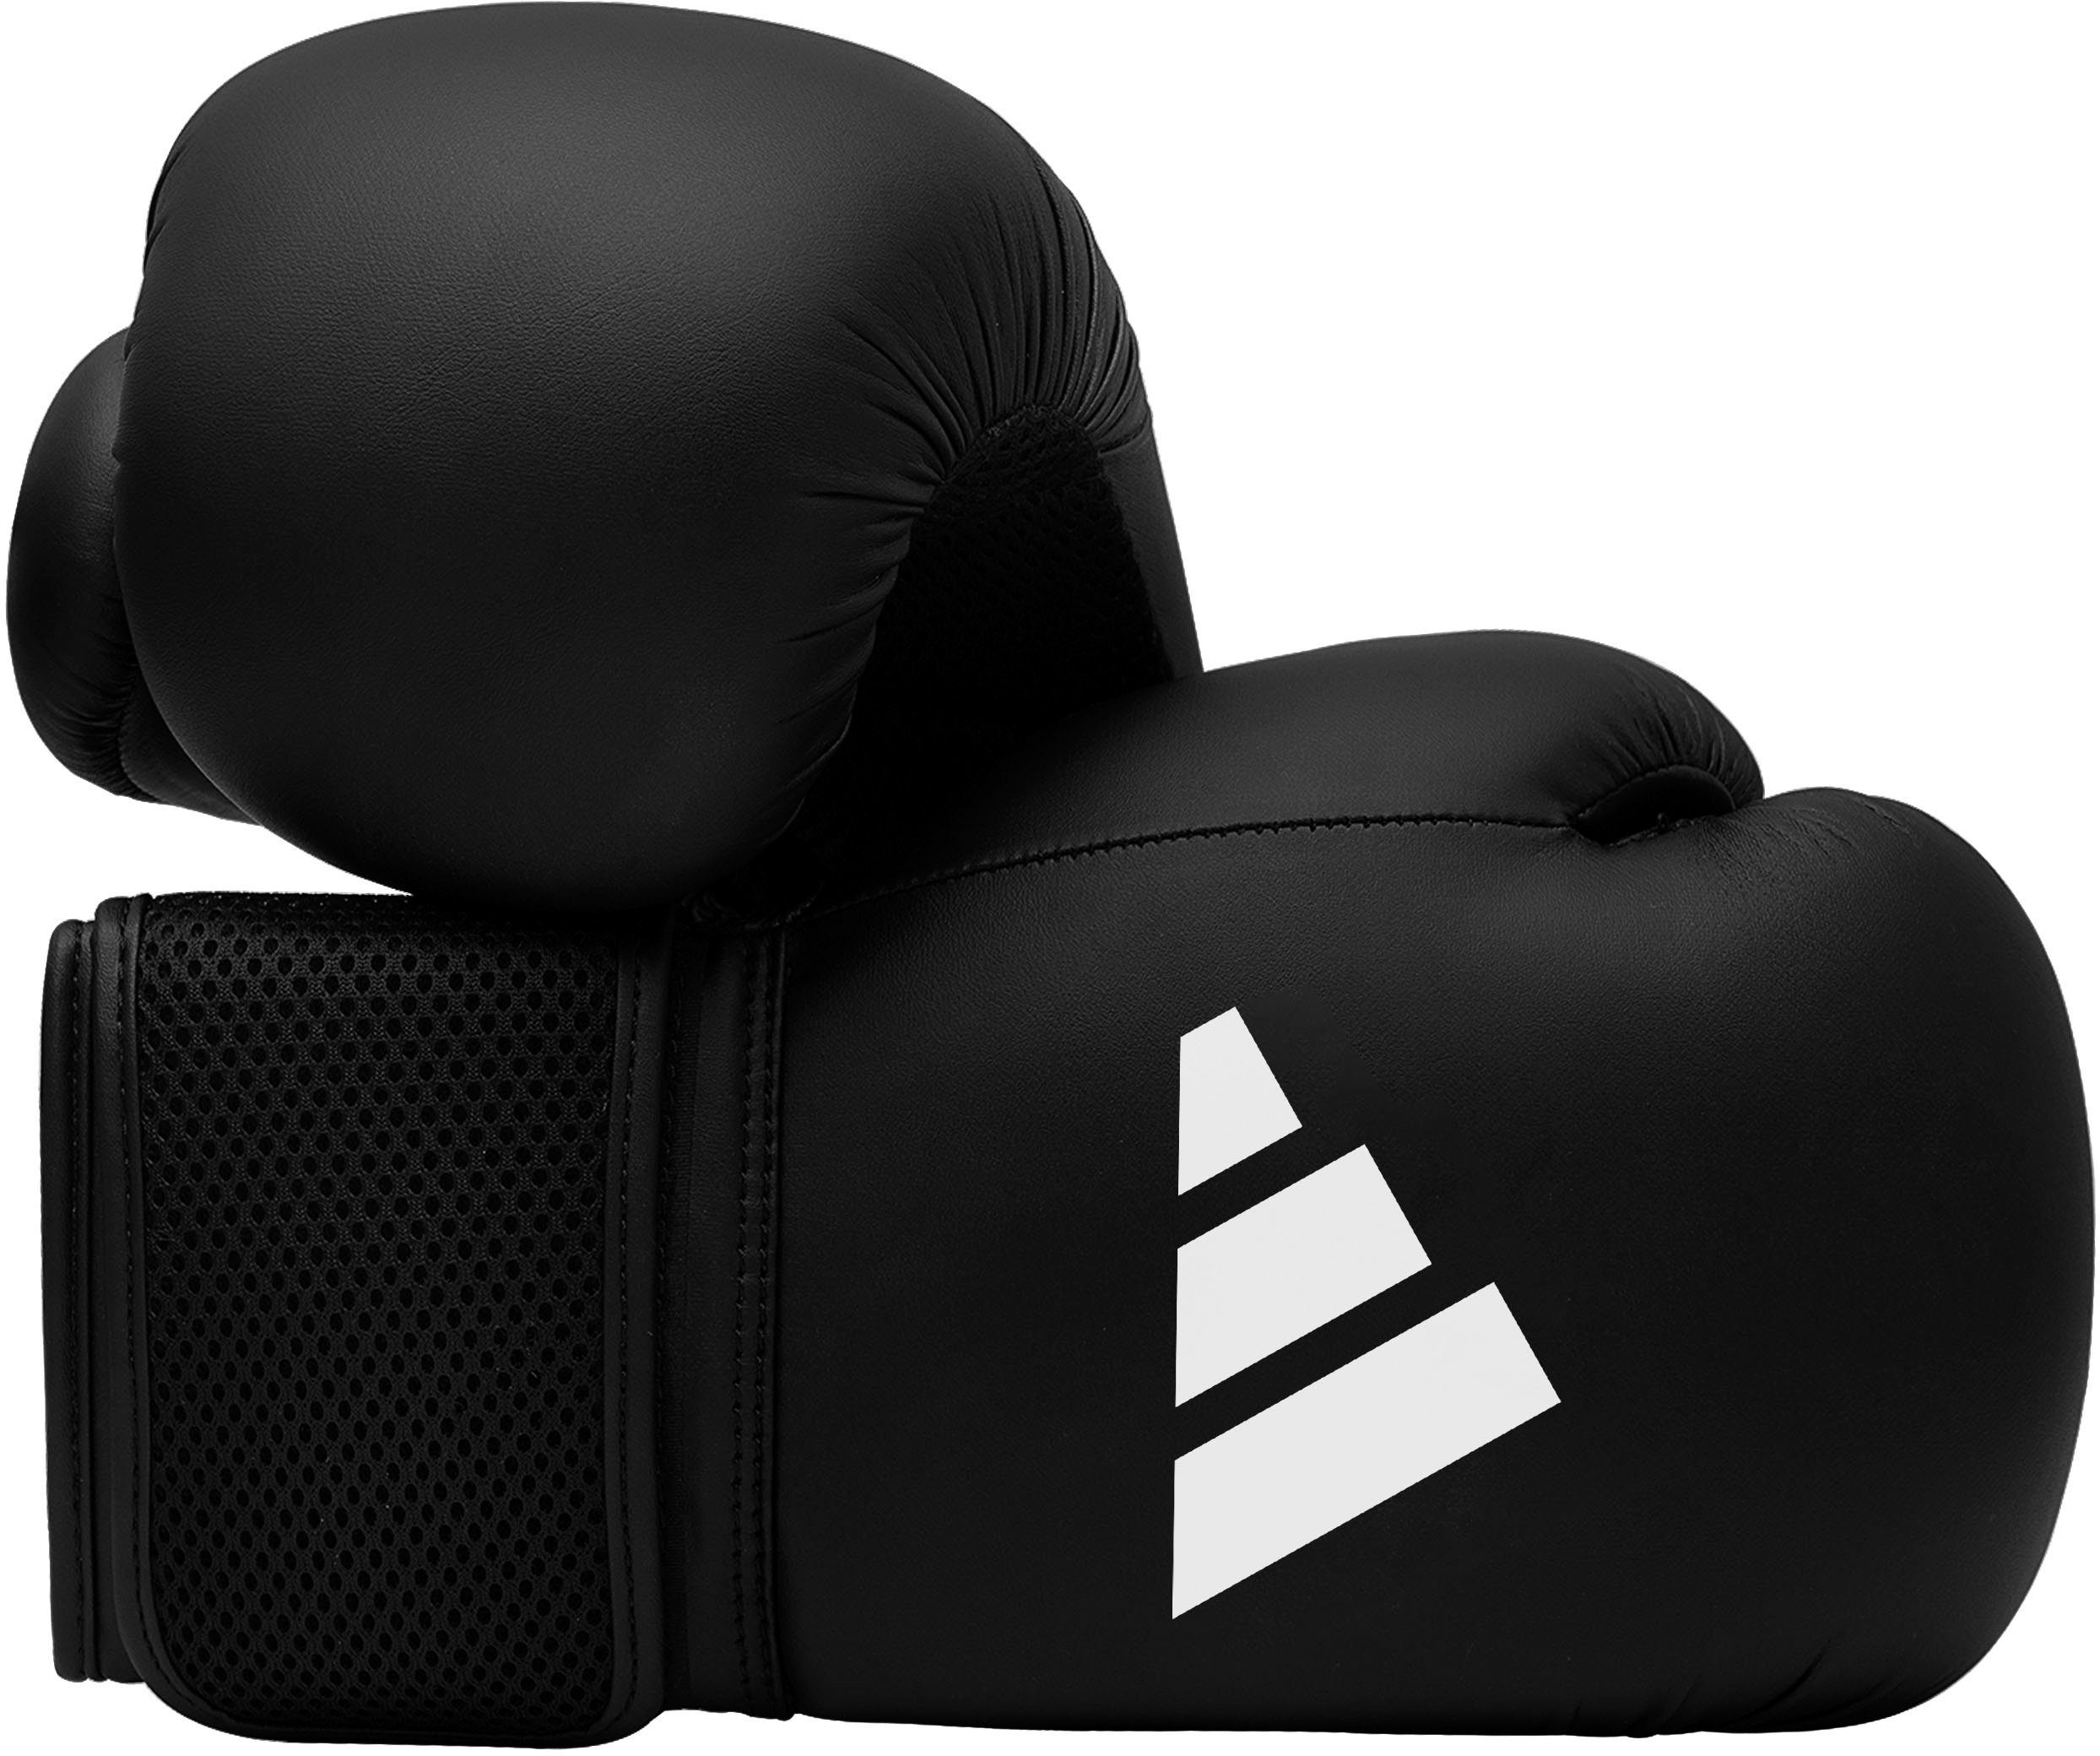 Boxhandschuhe schwarz Performance adidas